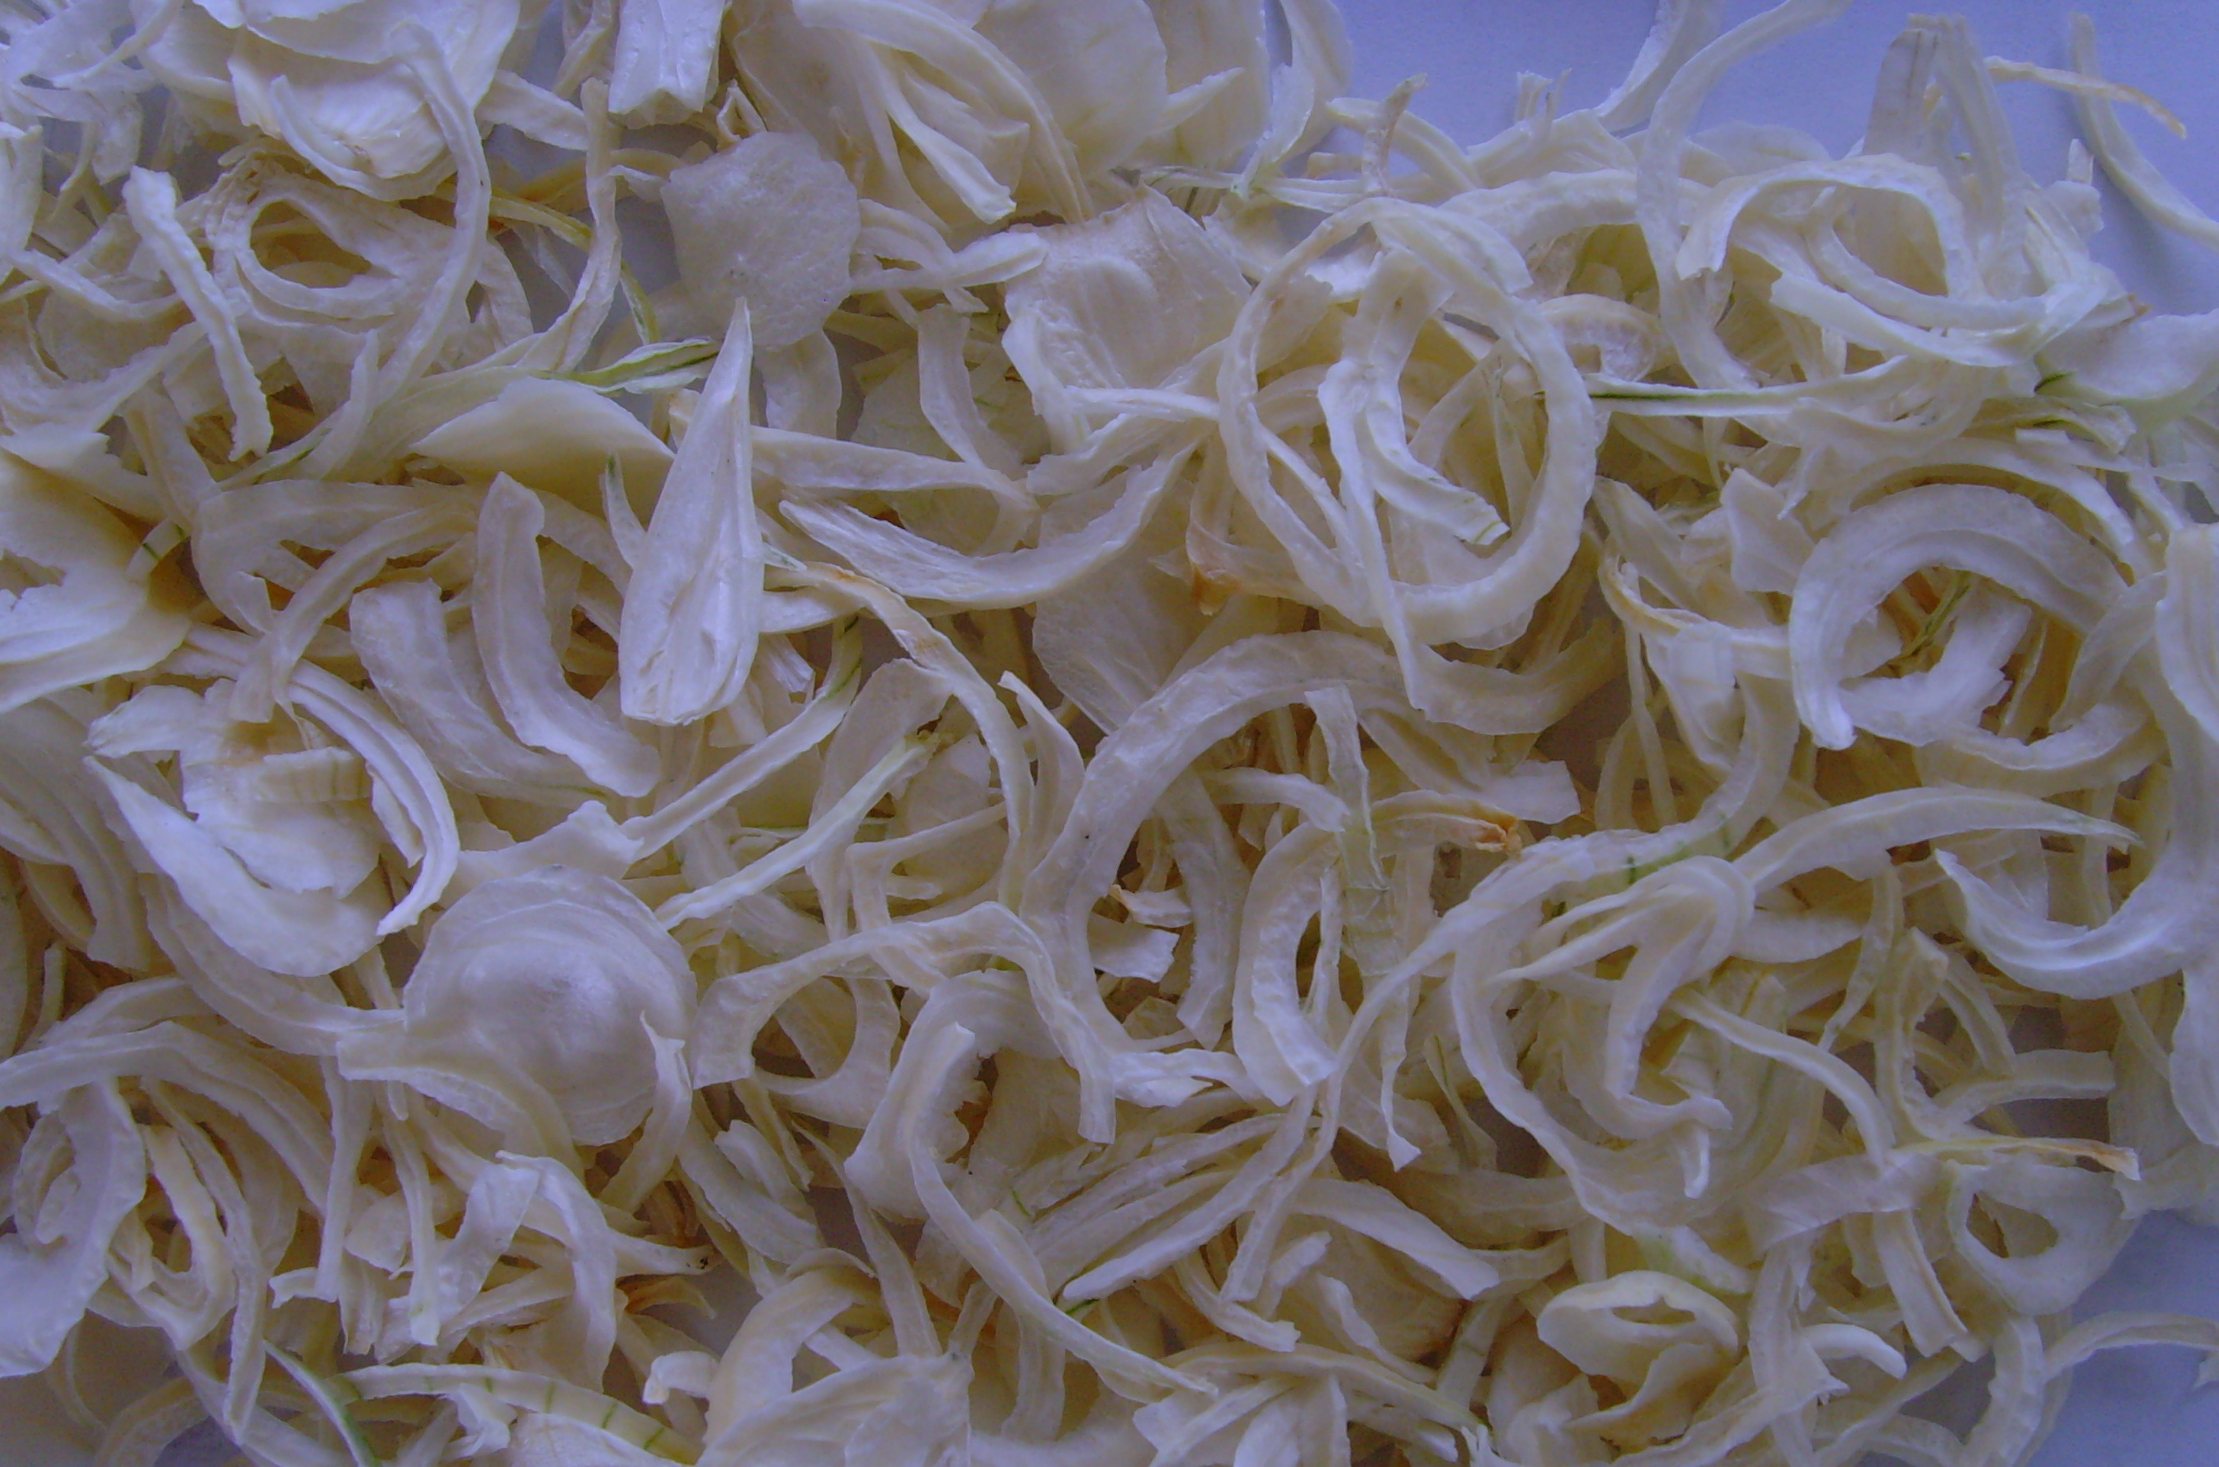 AD White Onion Granules